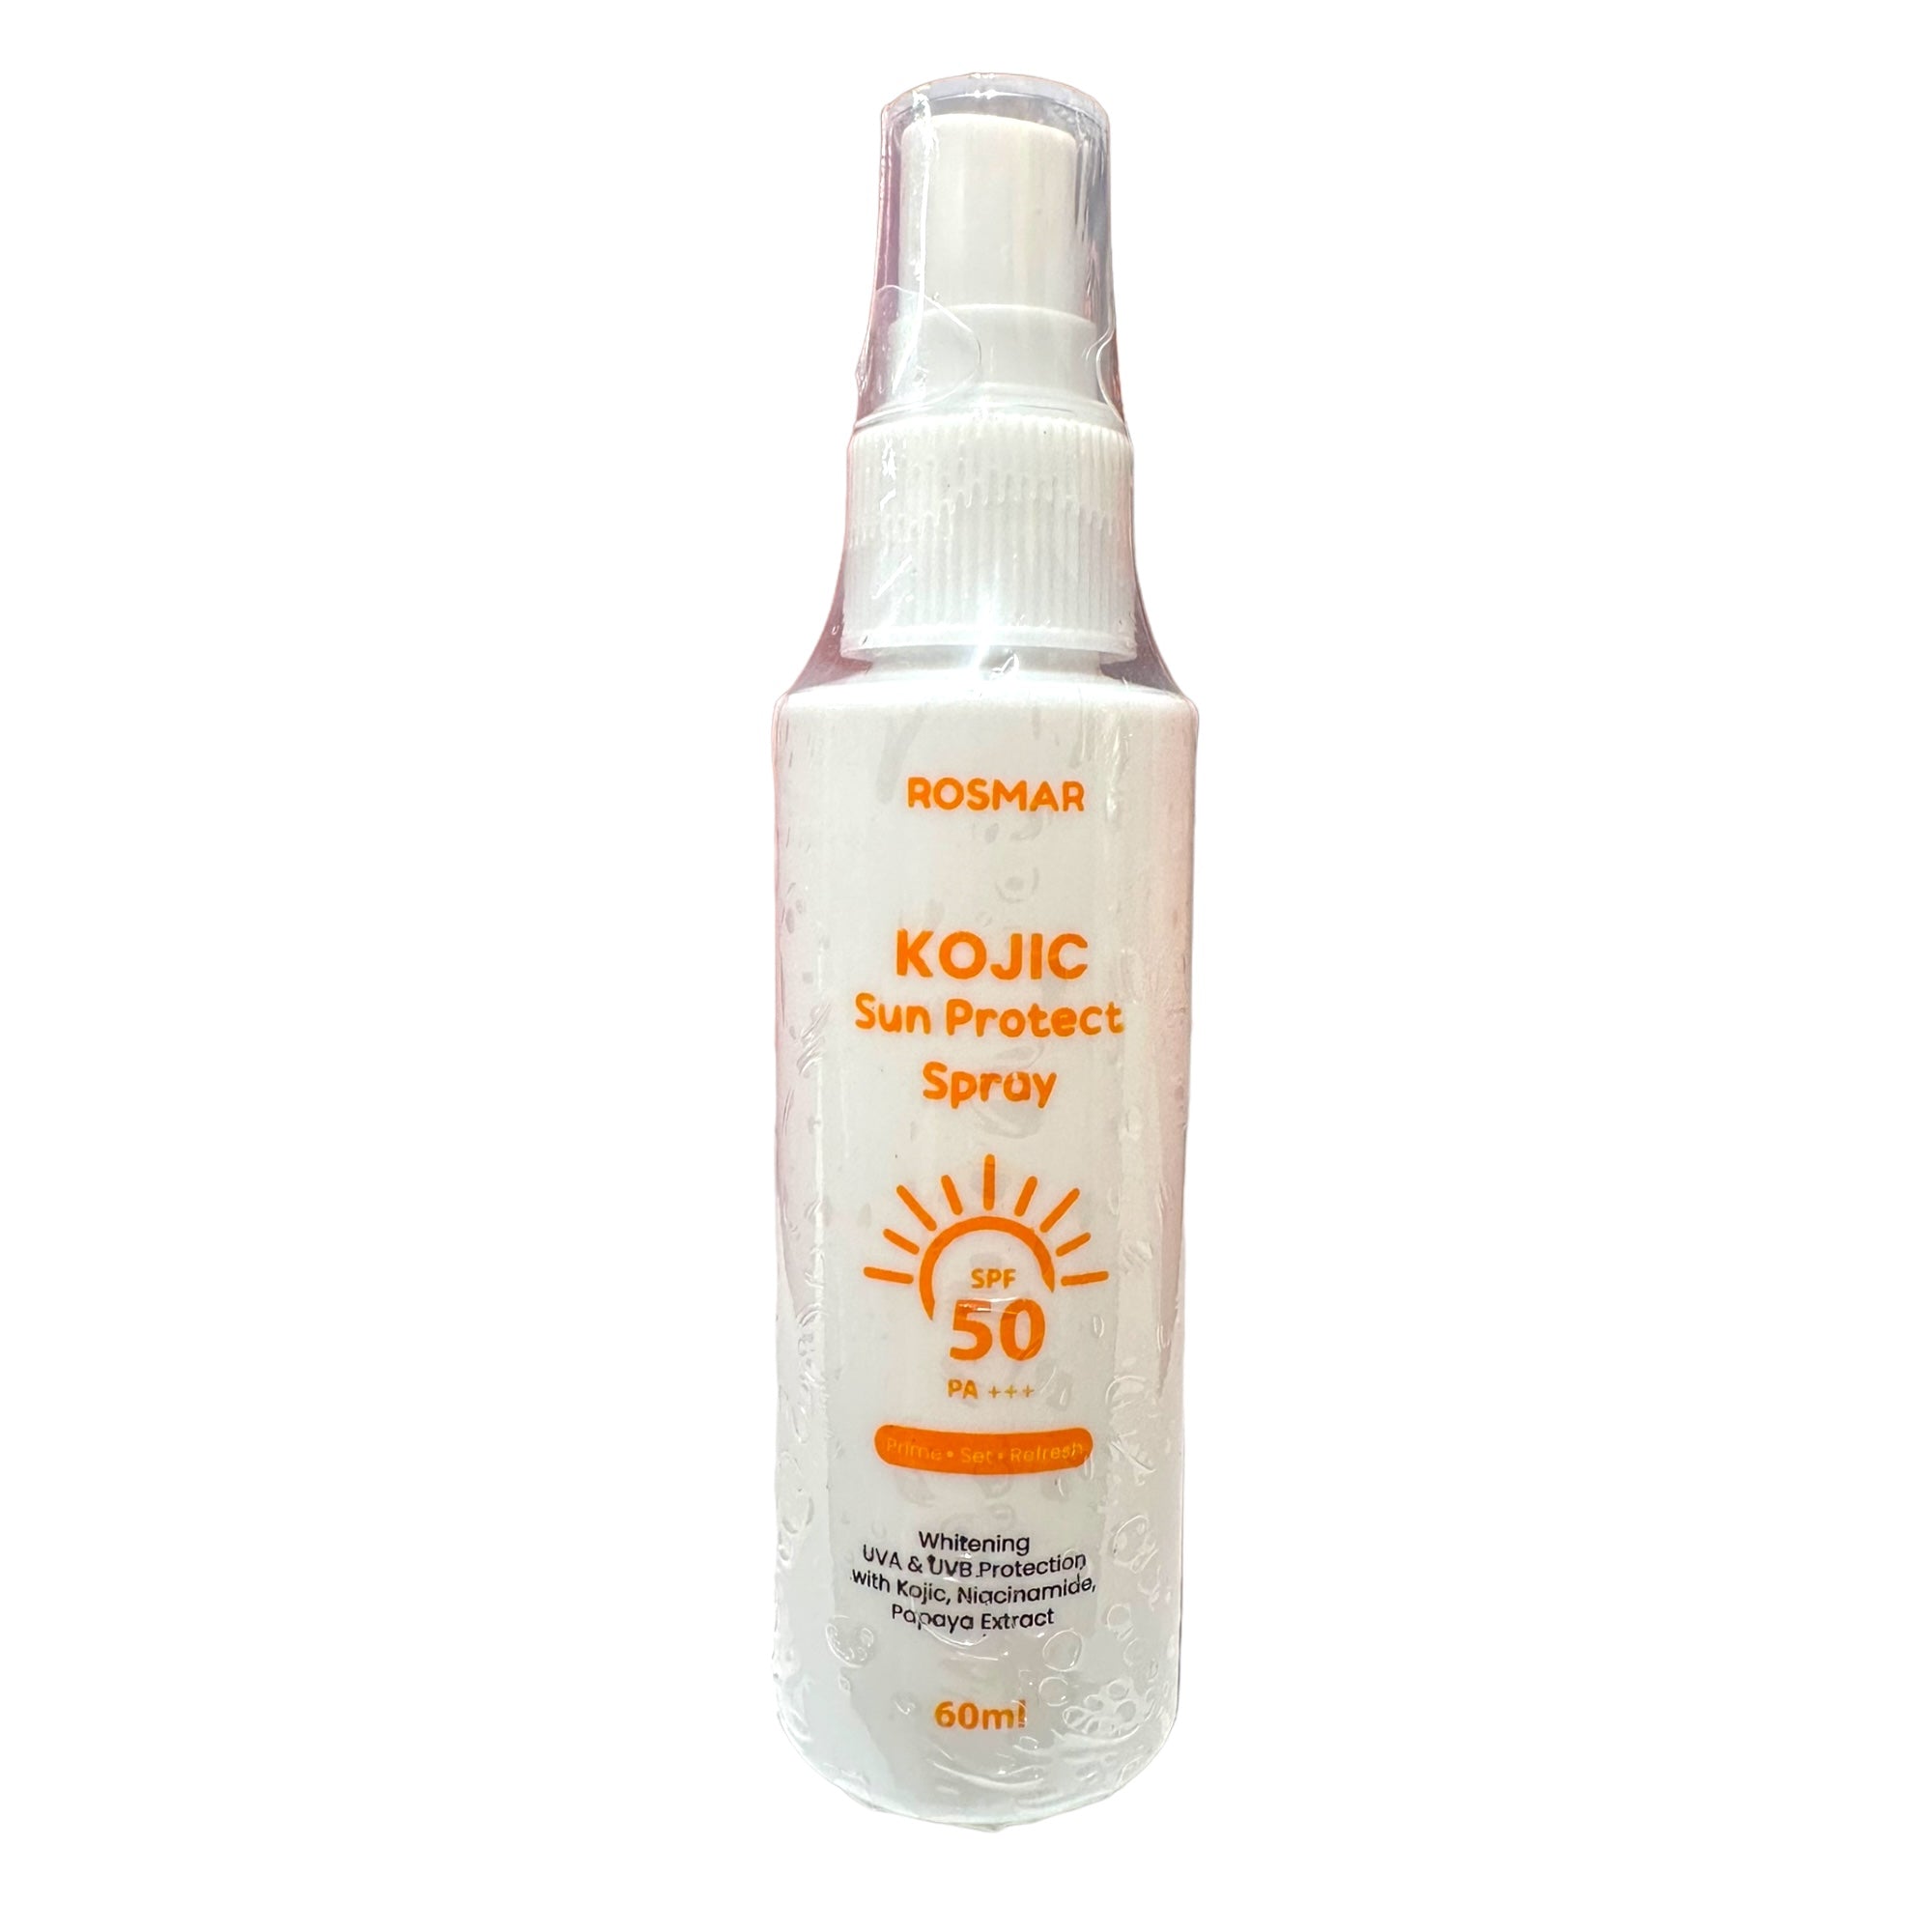 Rosmar - Kojic Sun Protect Spray SPF 50 PA+++ 60 ML